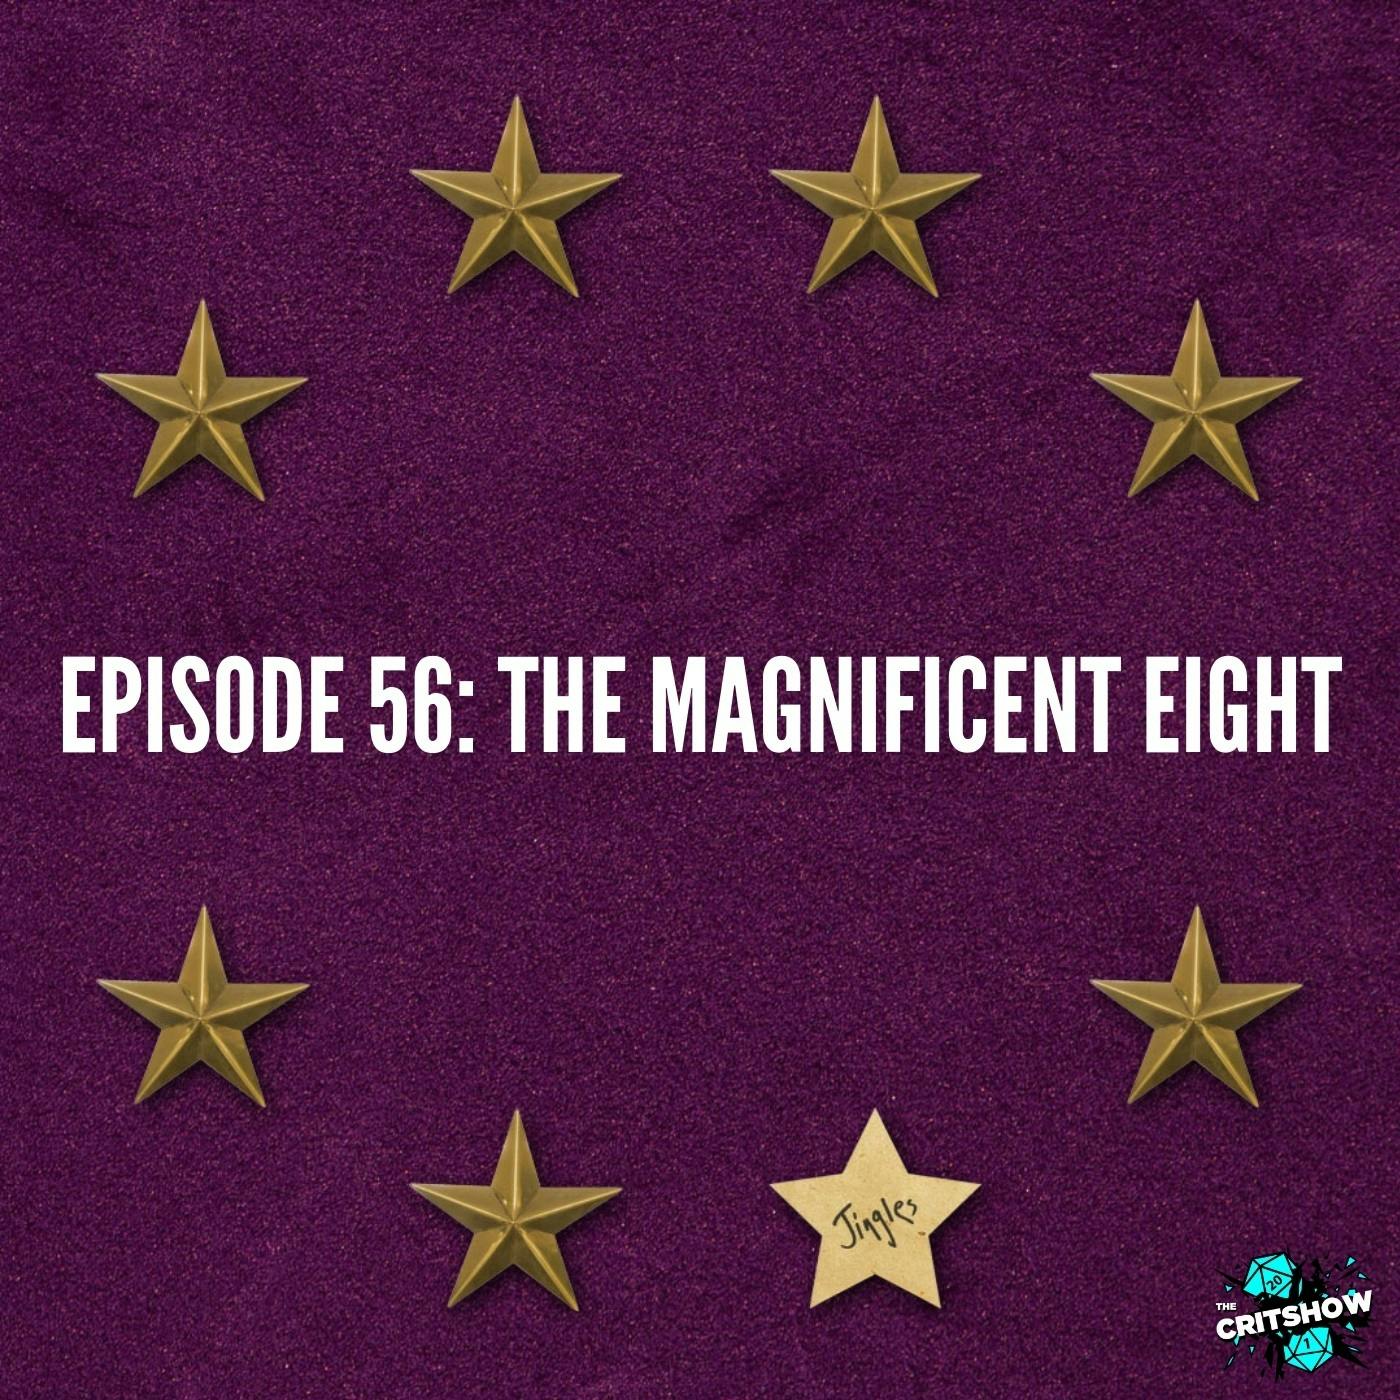 The Magnificent Eight (S1, E56)